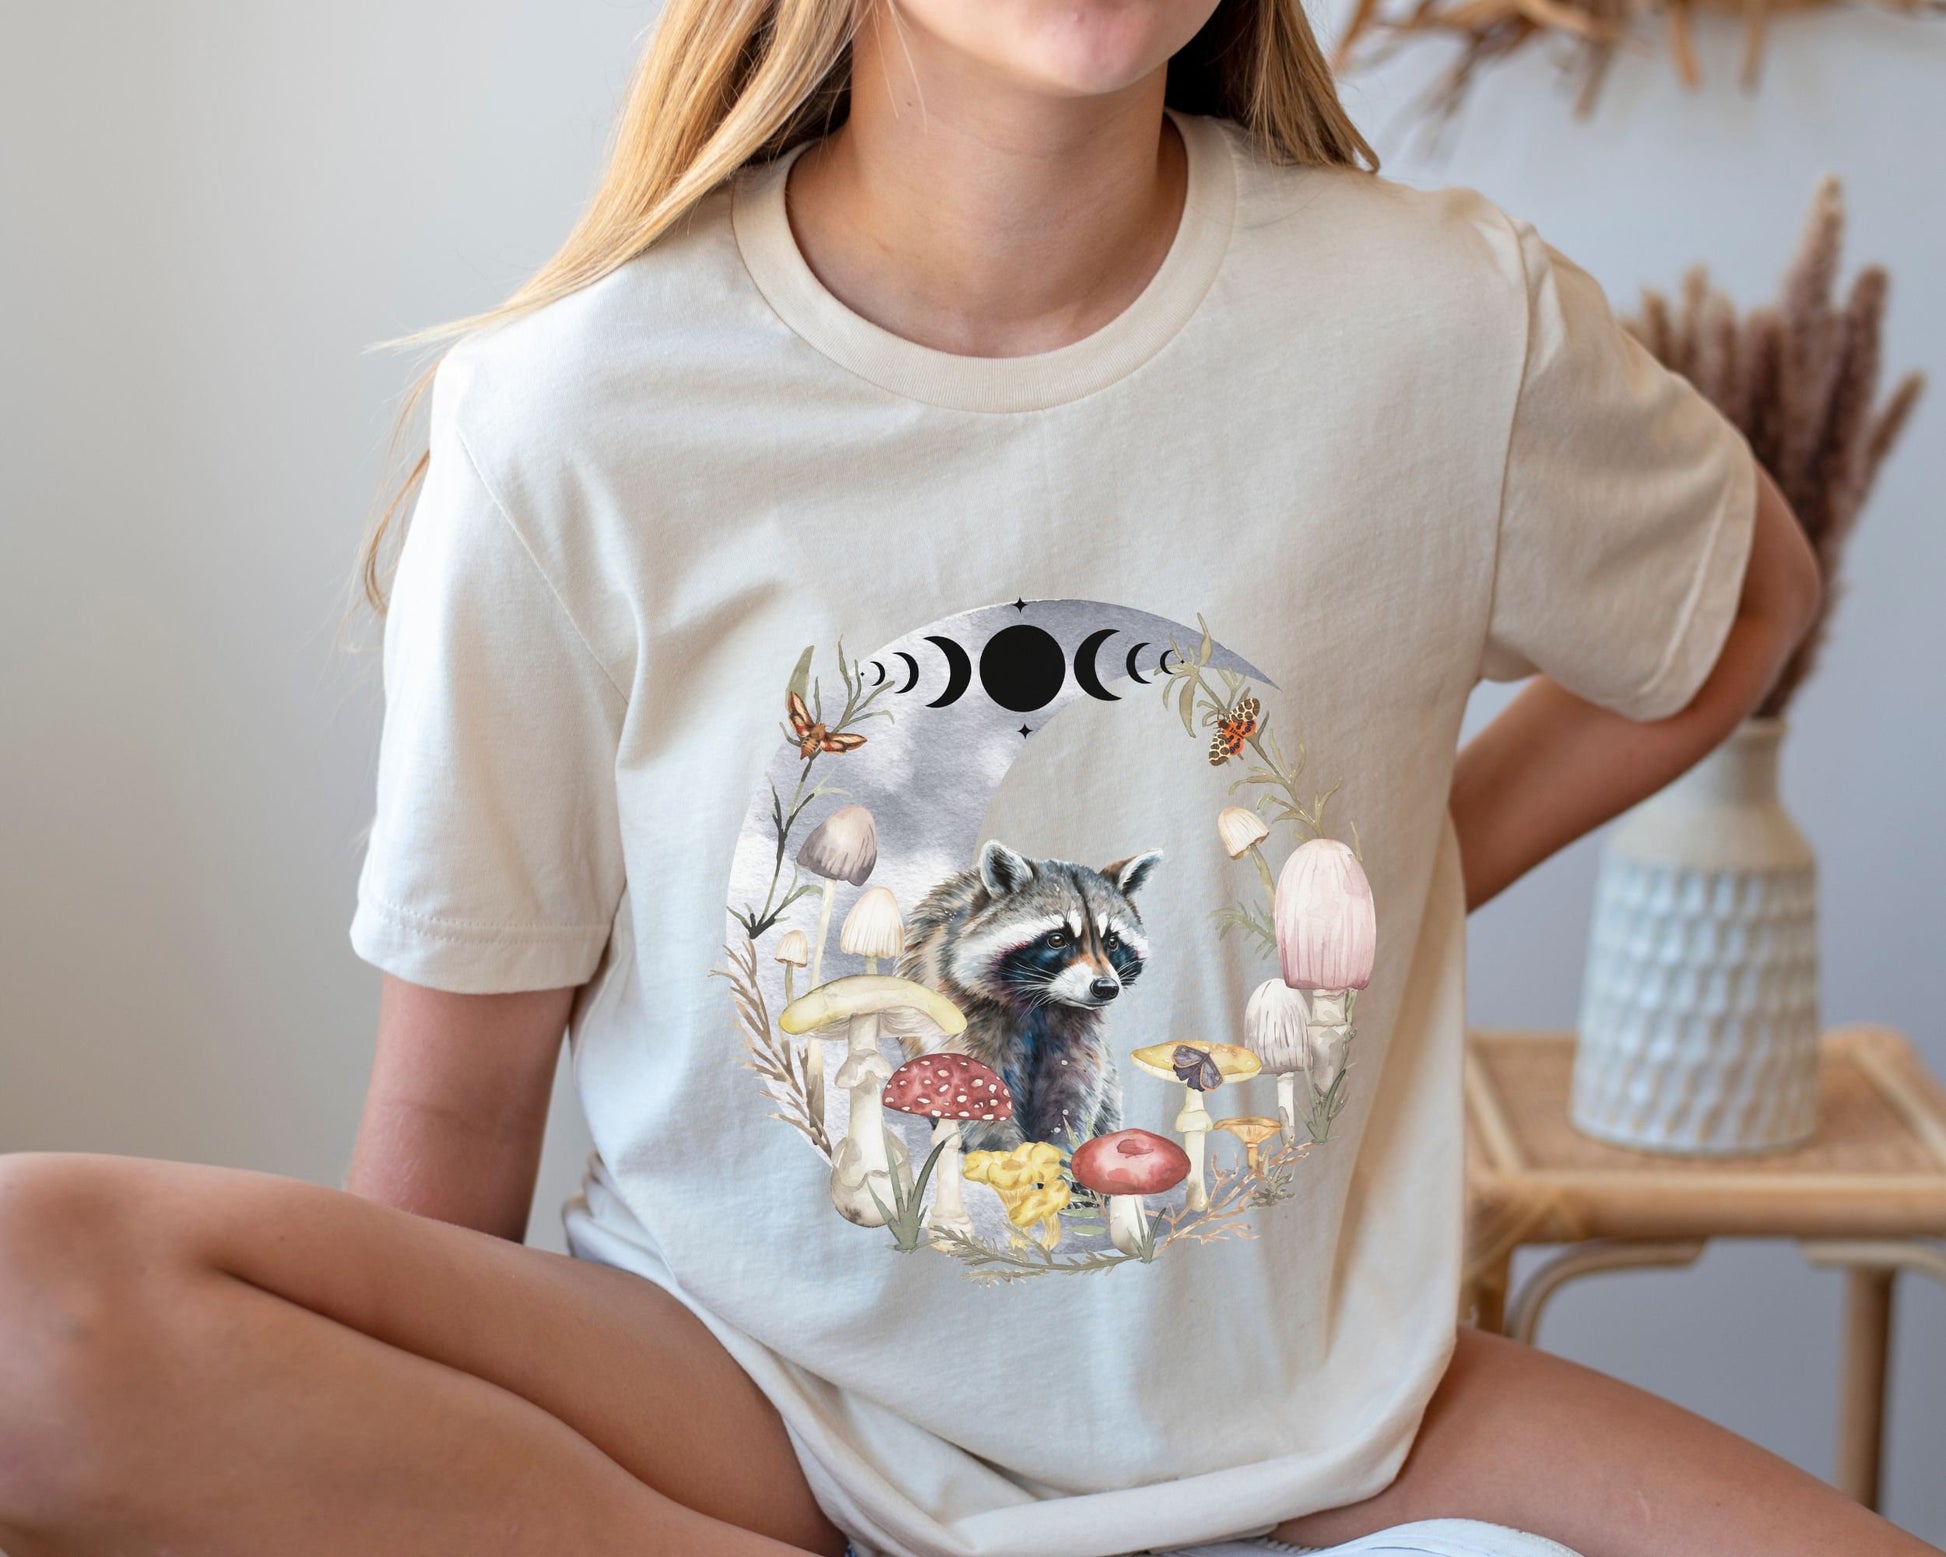 Raccoon Shirt For Kids Mushroom Shirt Goblincore Toddler Dark Cottagecore Shirt Kids Forestcore Shirt Racoon Shirt for Toddler Moon Phases